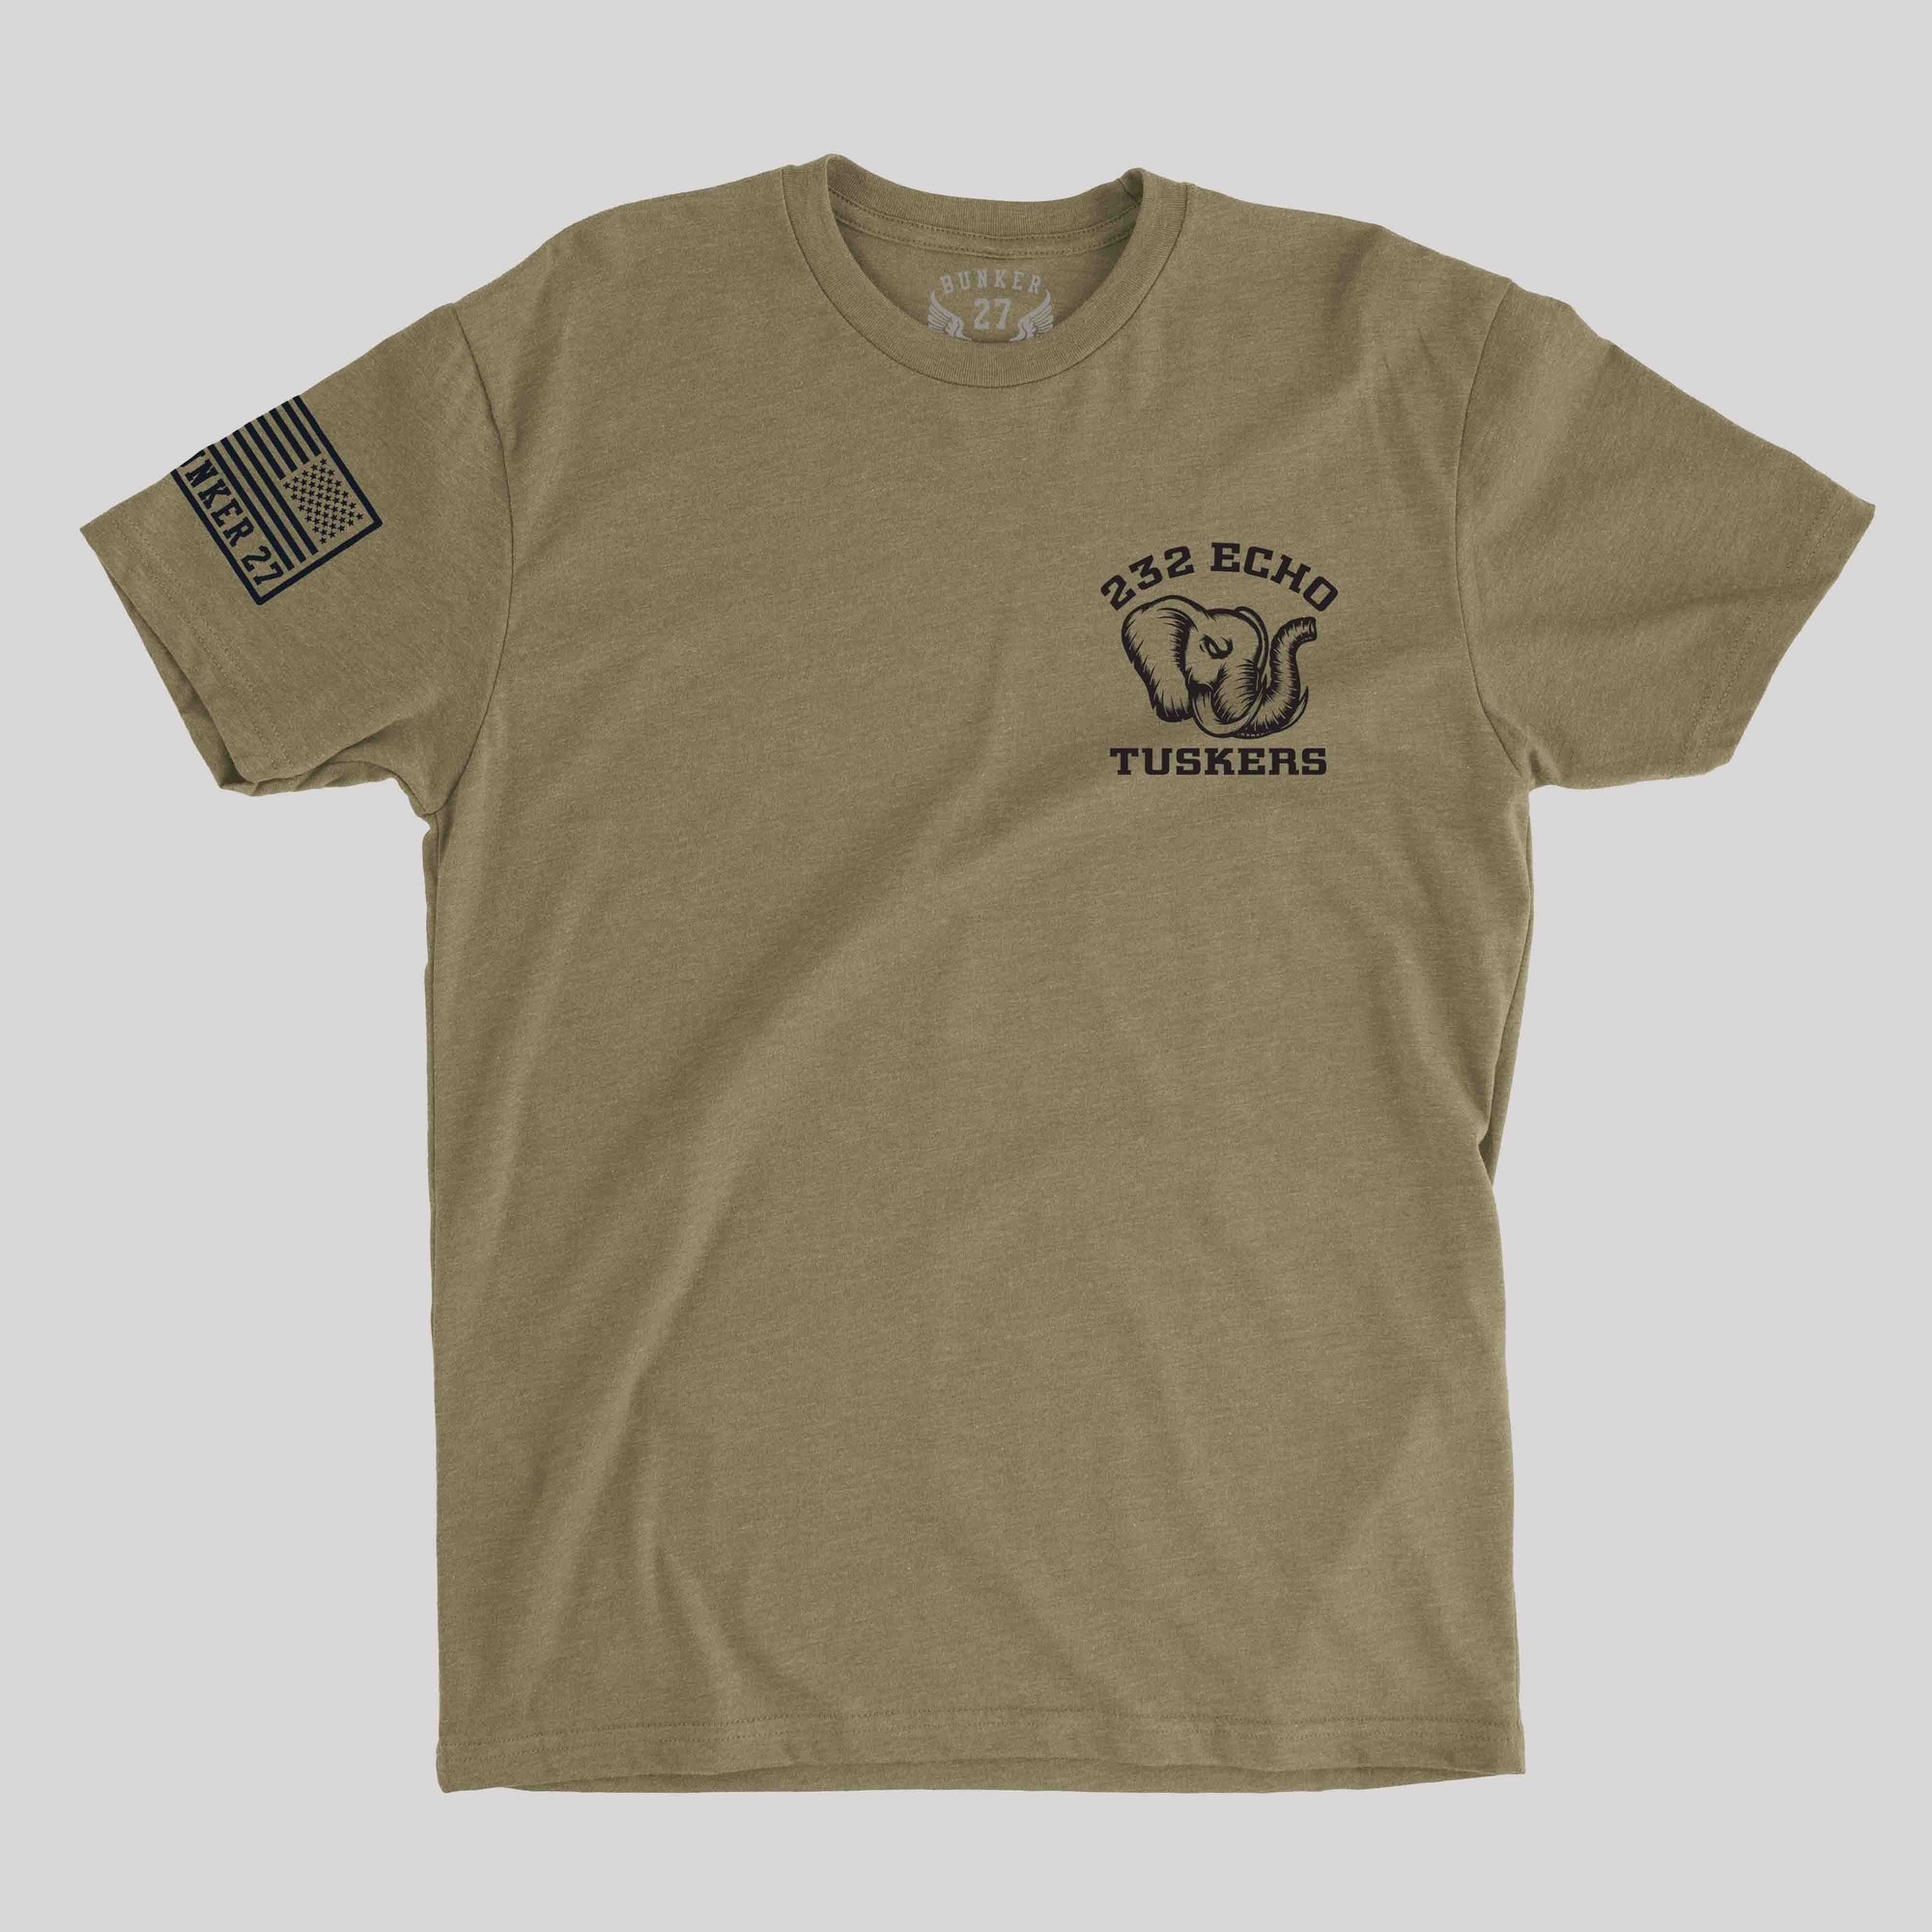 232 Echo Company Army T-Shirt